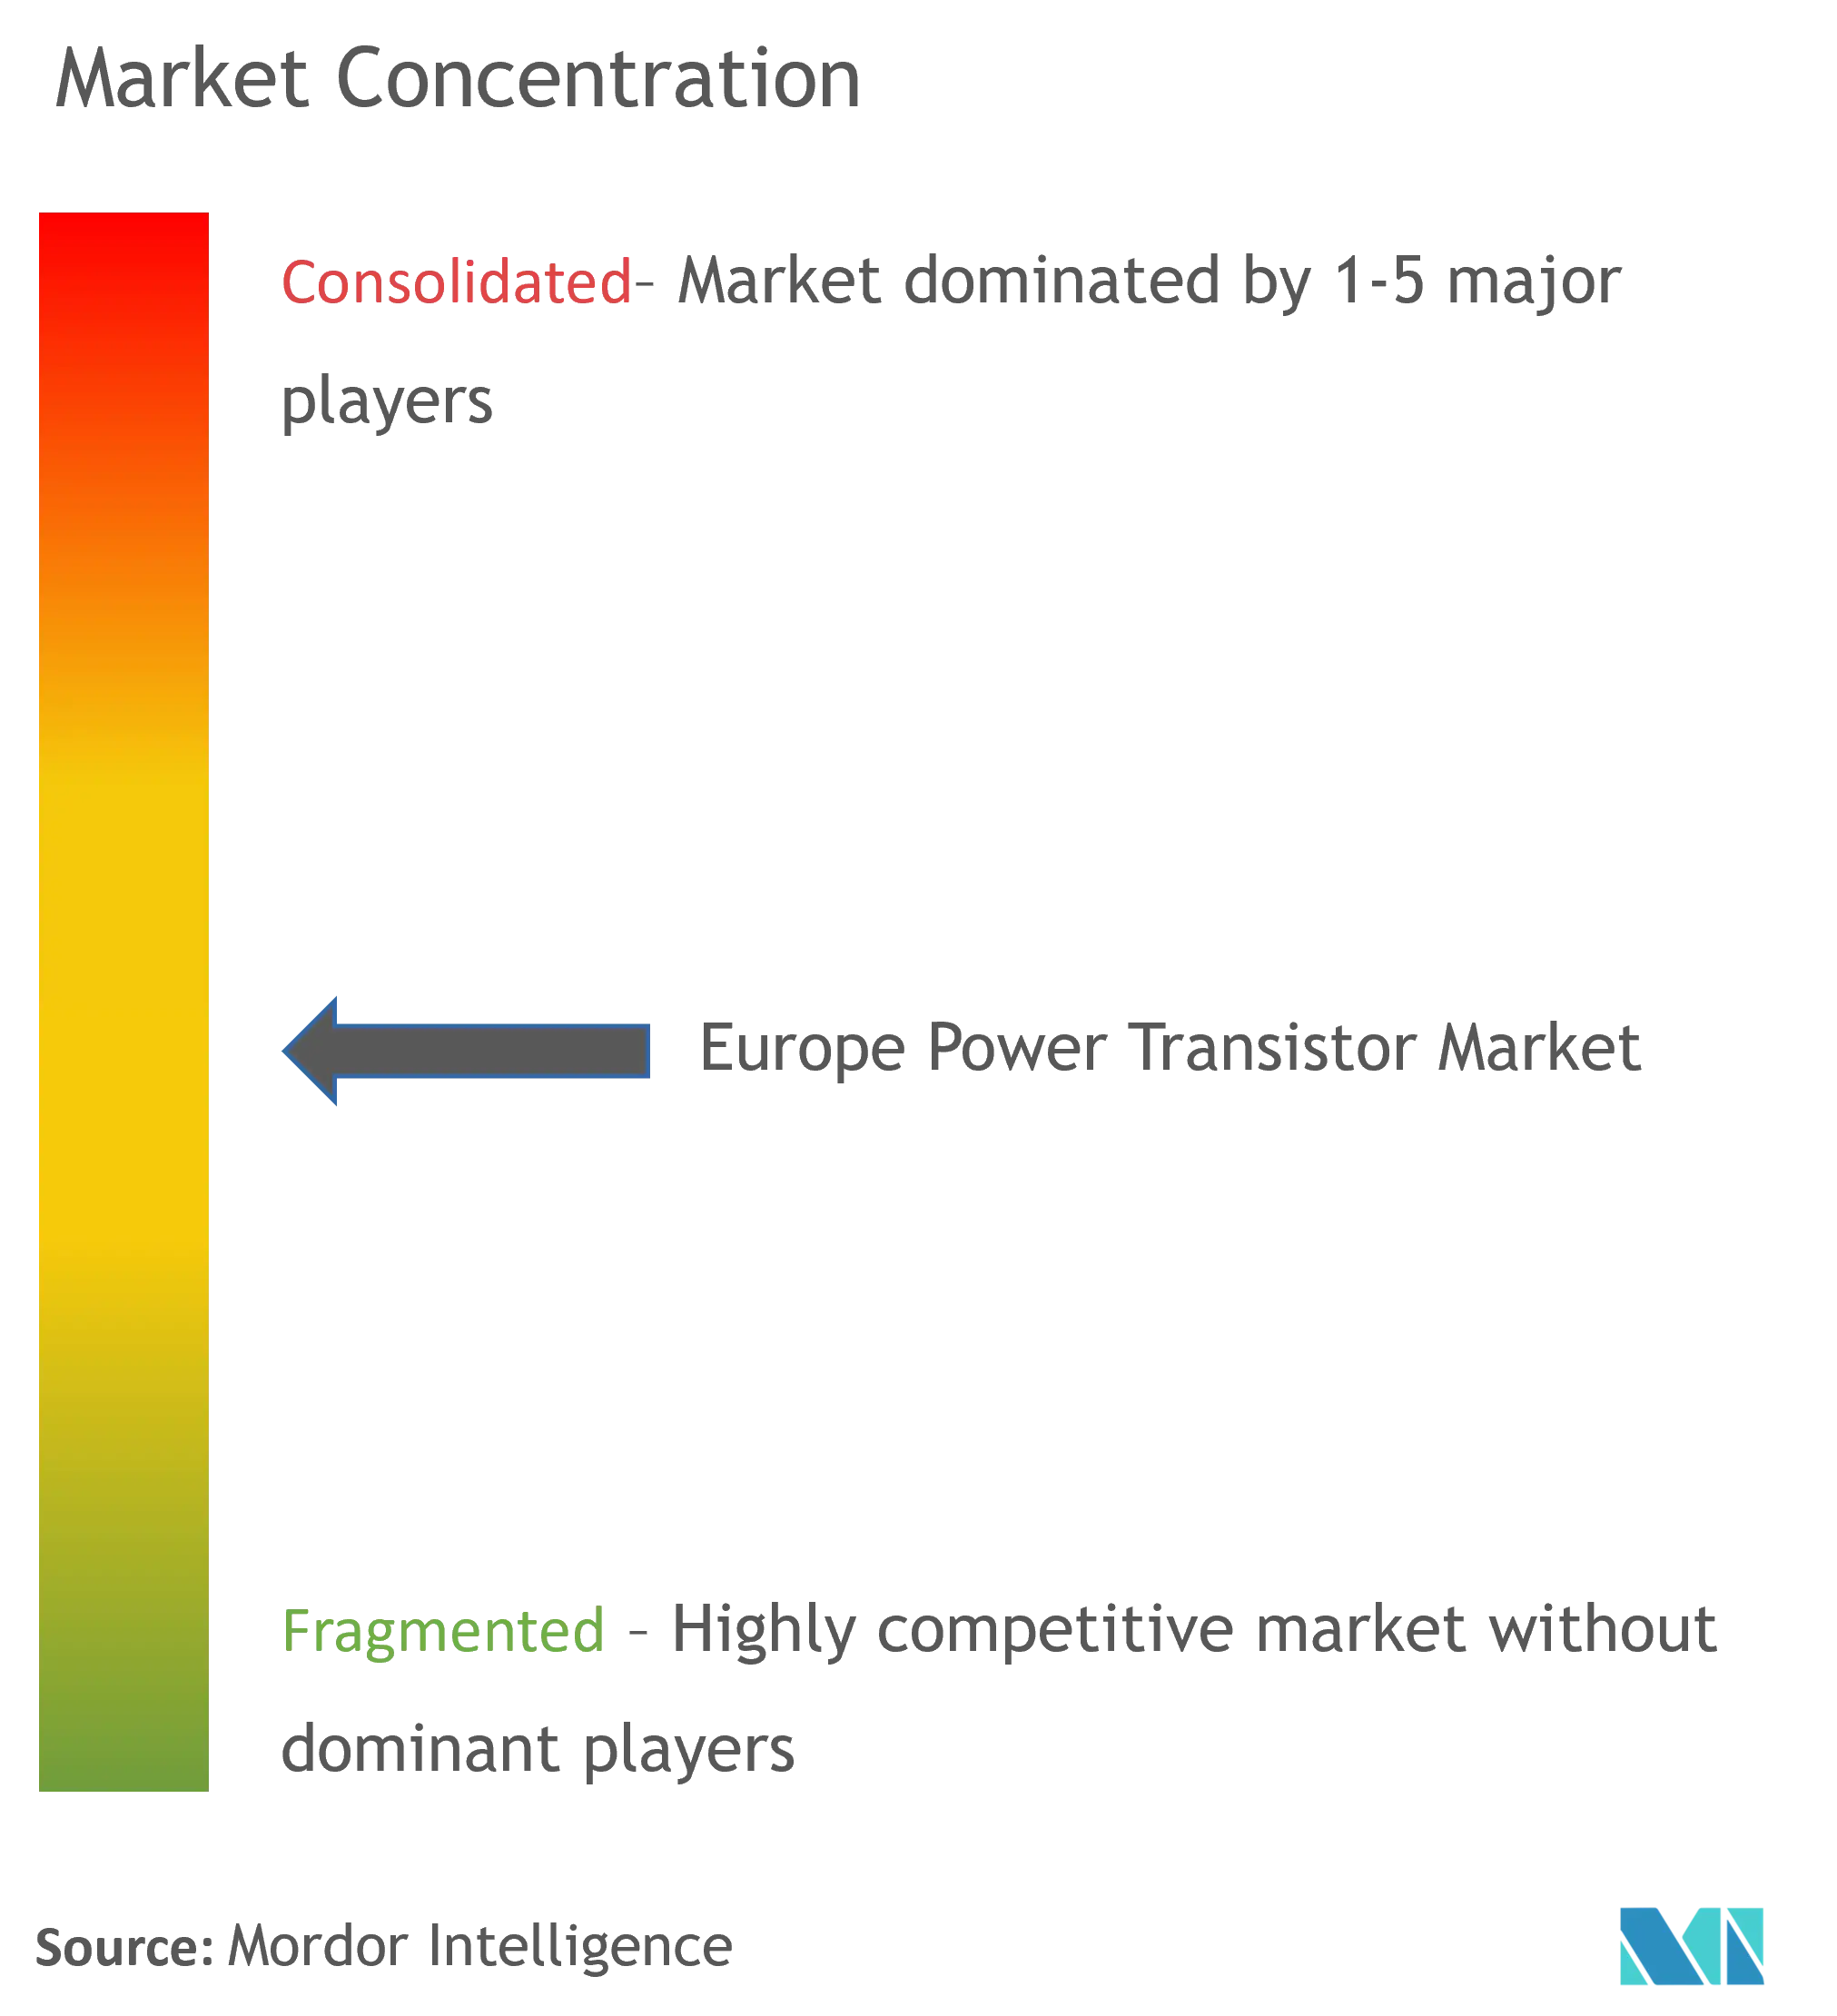 Europe Power Transistor Market Concentration